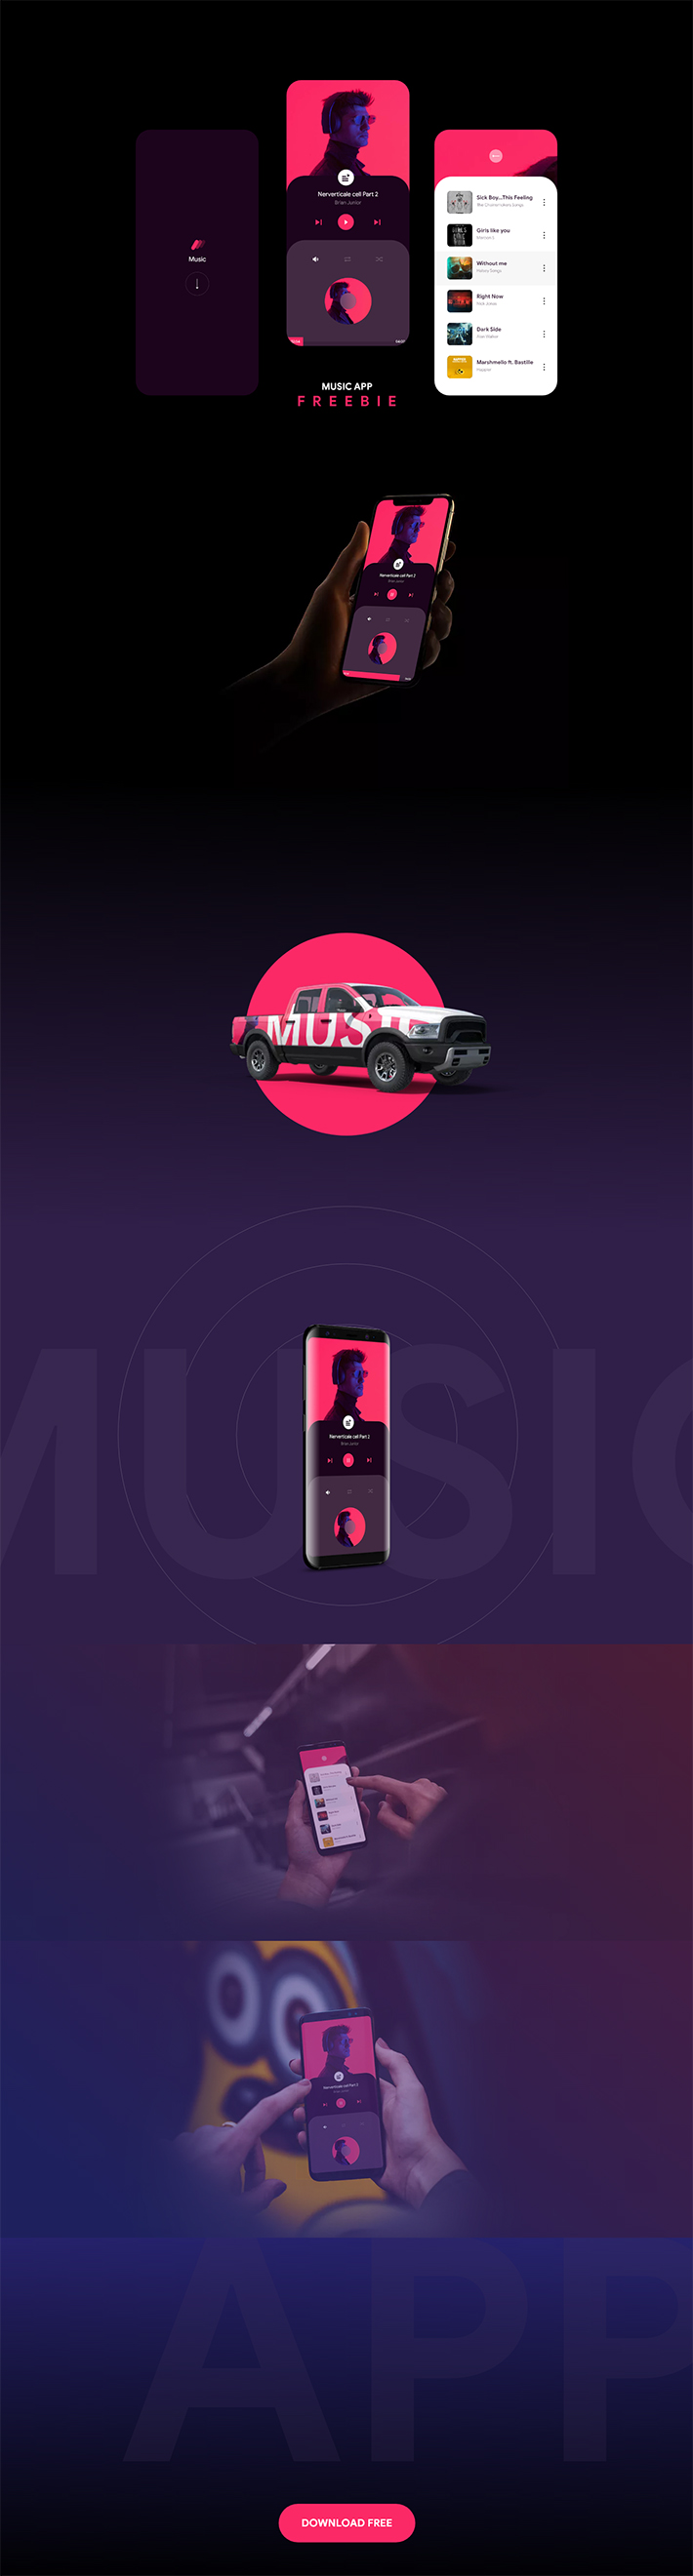 Free Download Perfect Music App Design (2019)